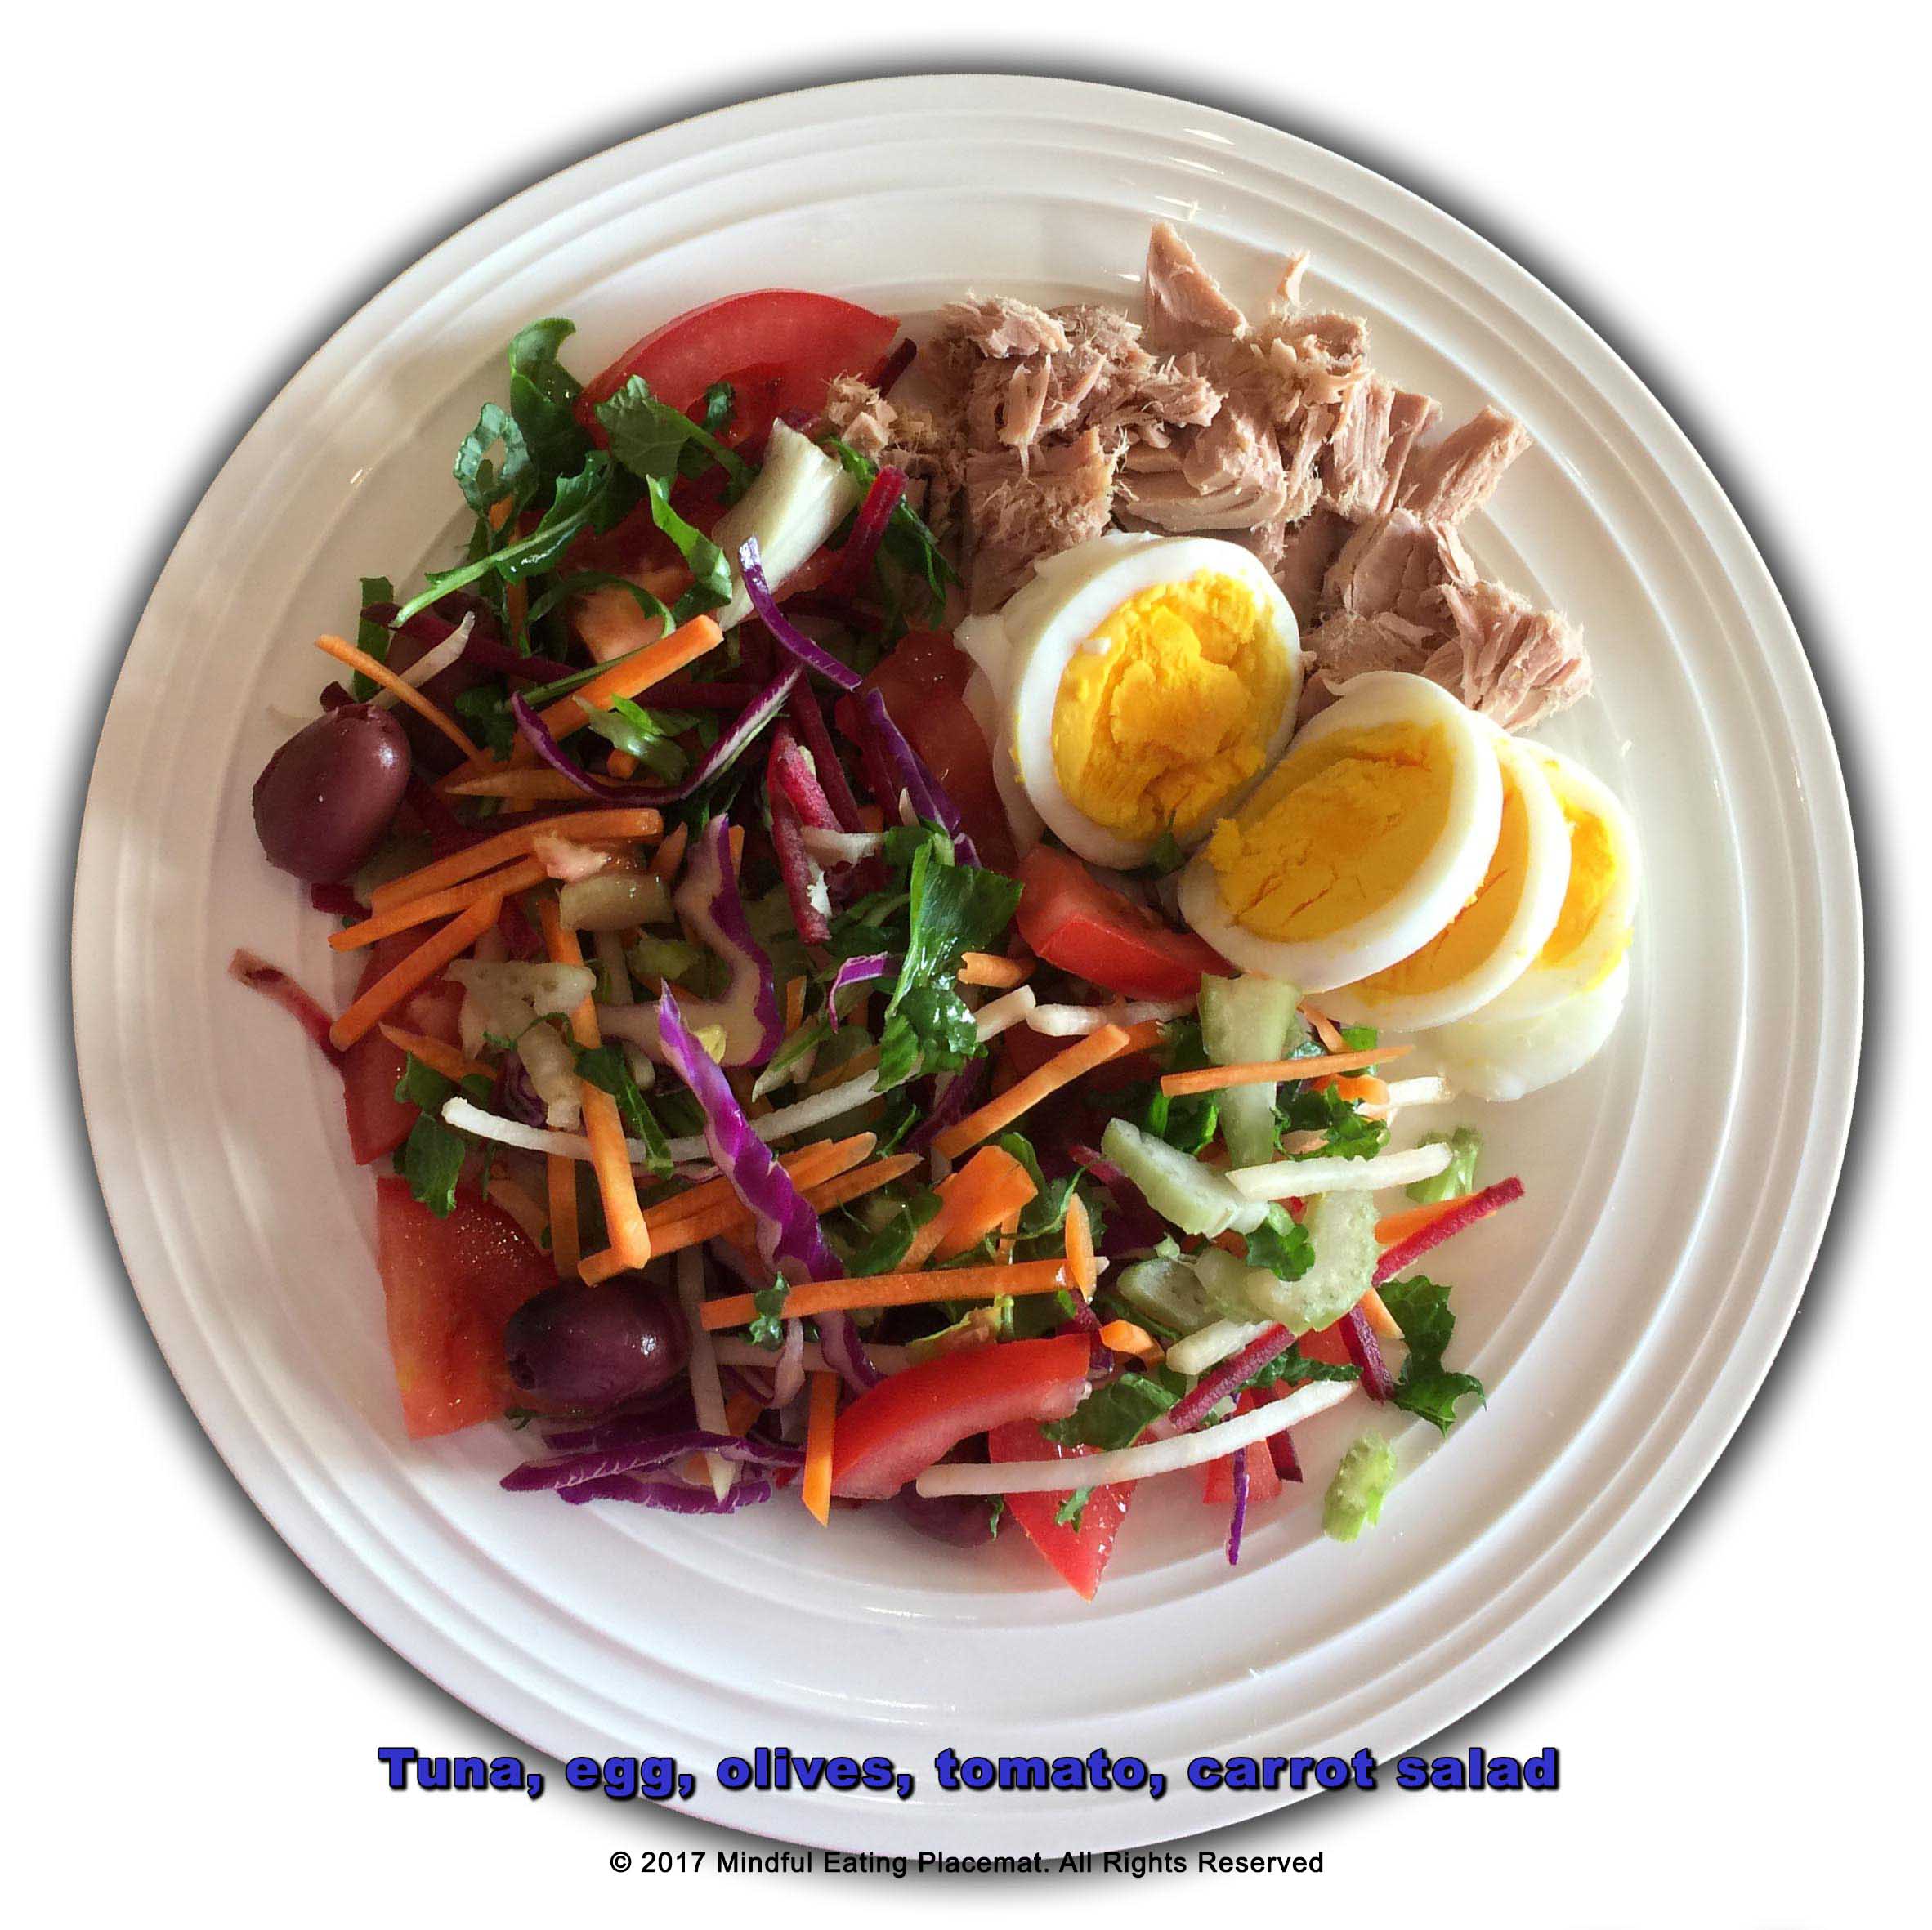 Tuna, boiled egg, olives, tomato and carrot salad